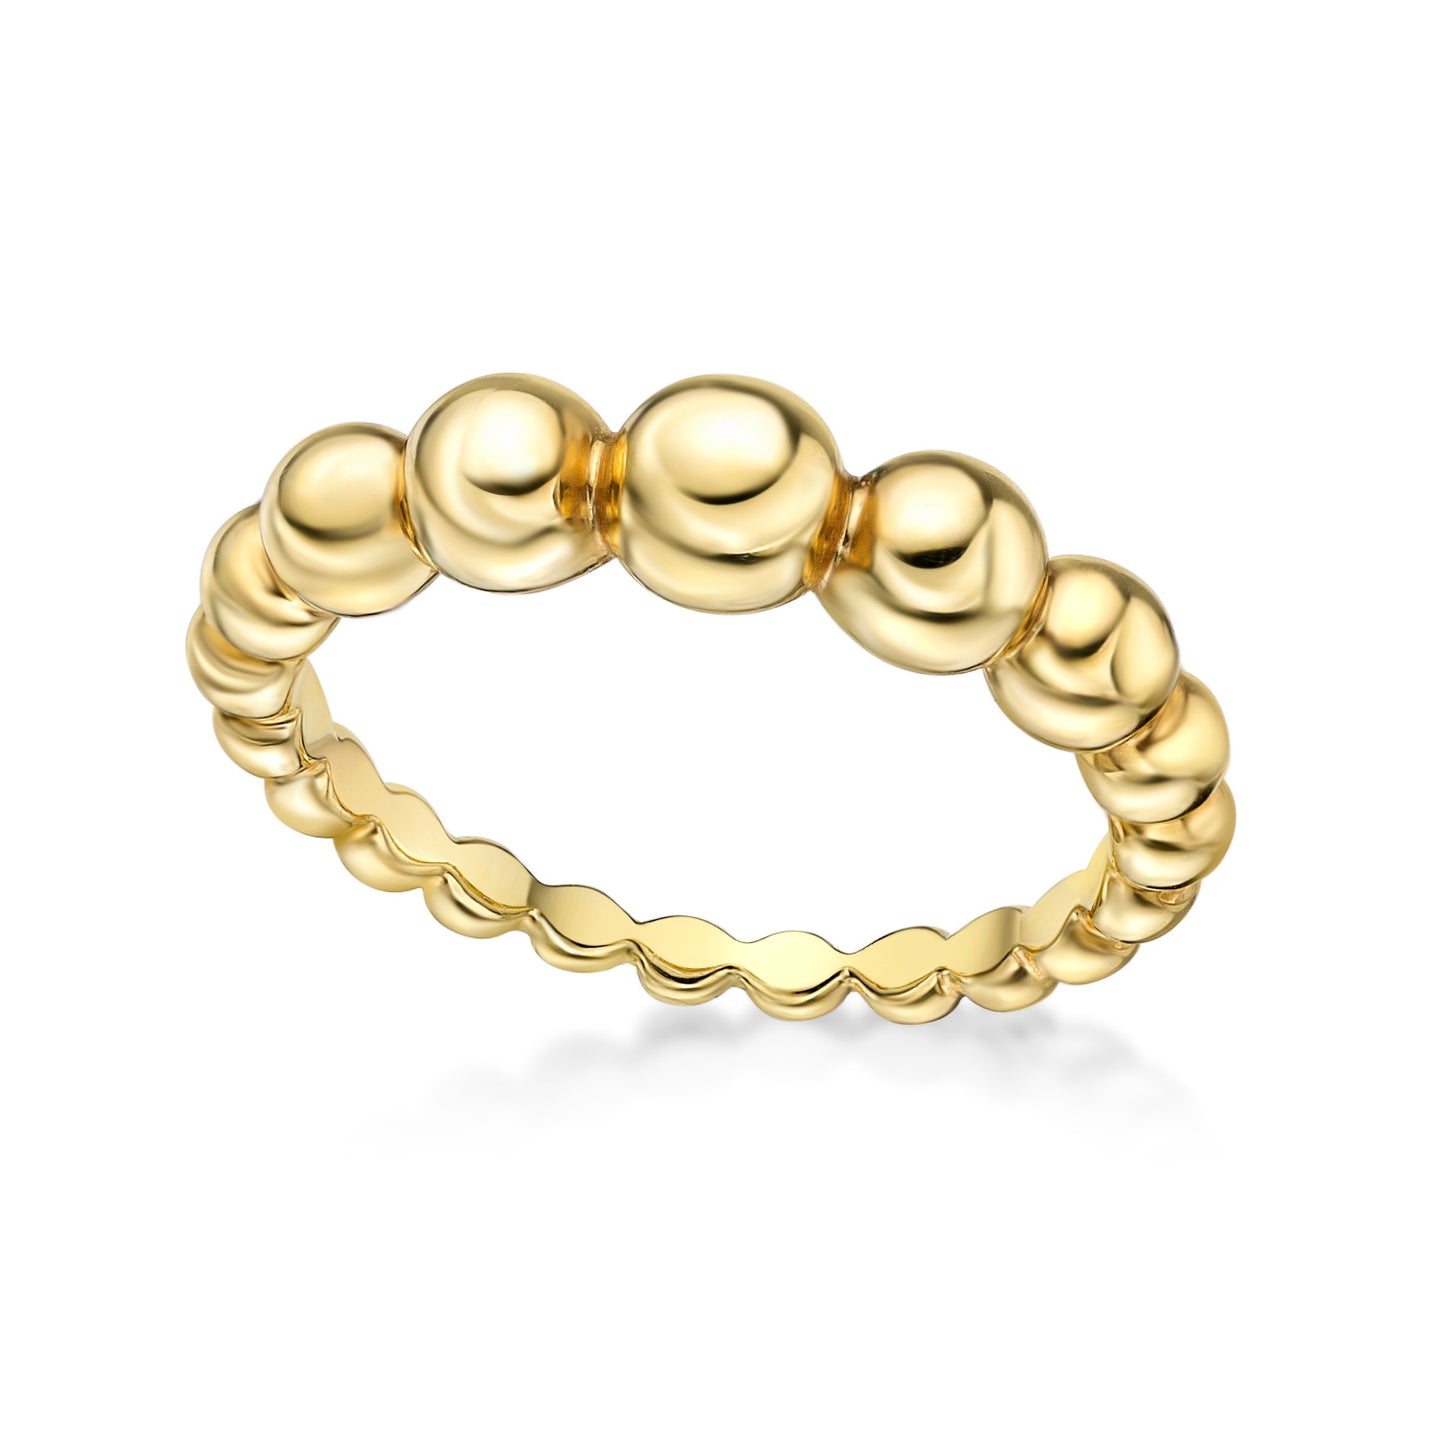 Handmade 18K Yellow Gold Bubble Ring